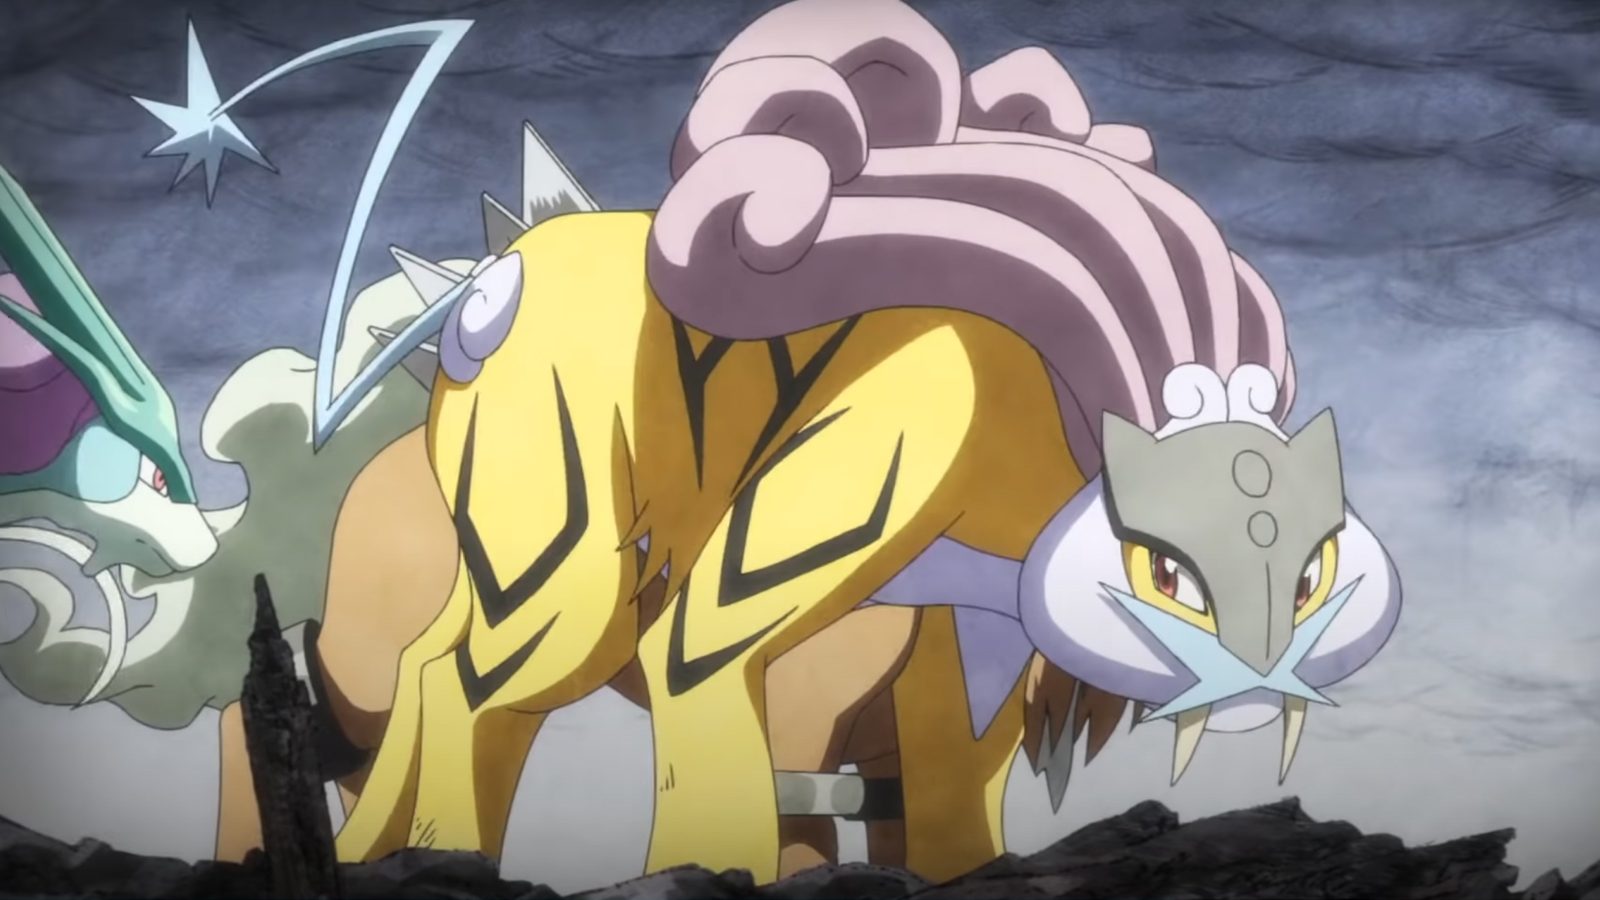 Raikou, an Electric-type Pokemon in the franchise